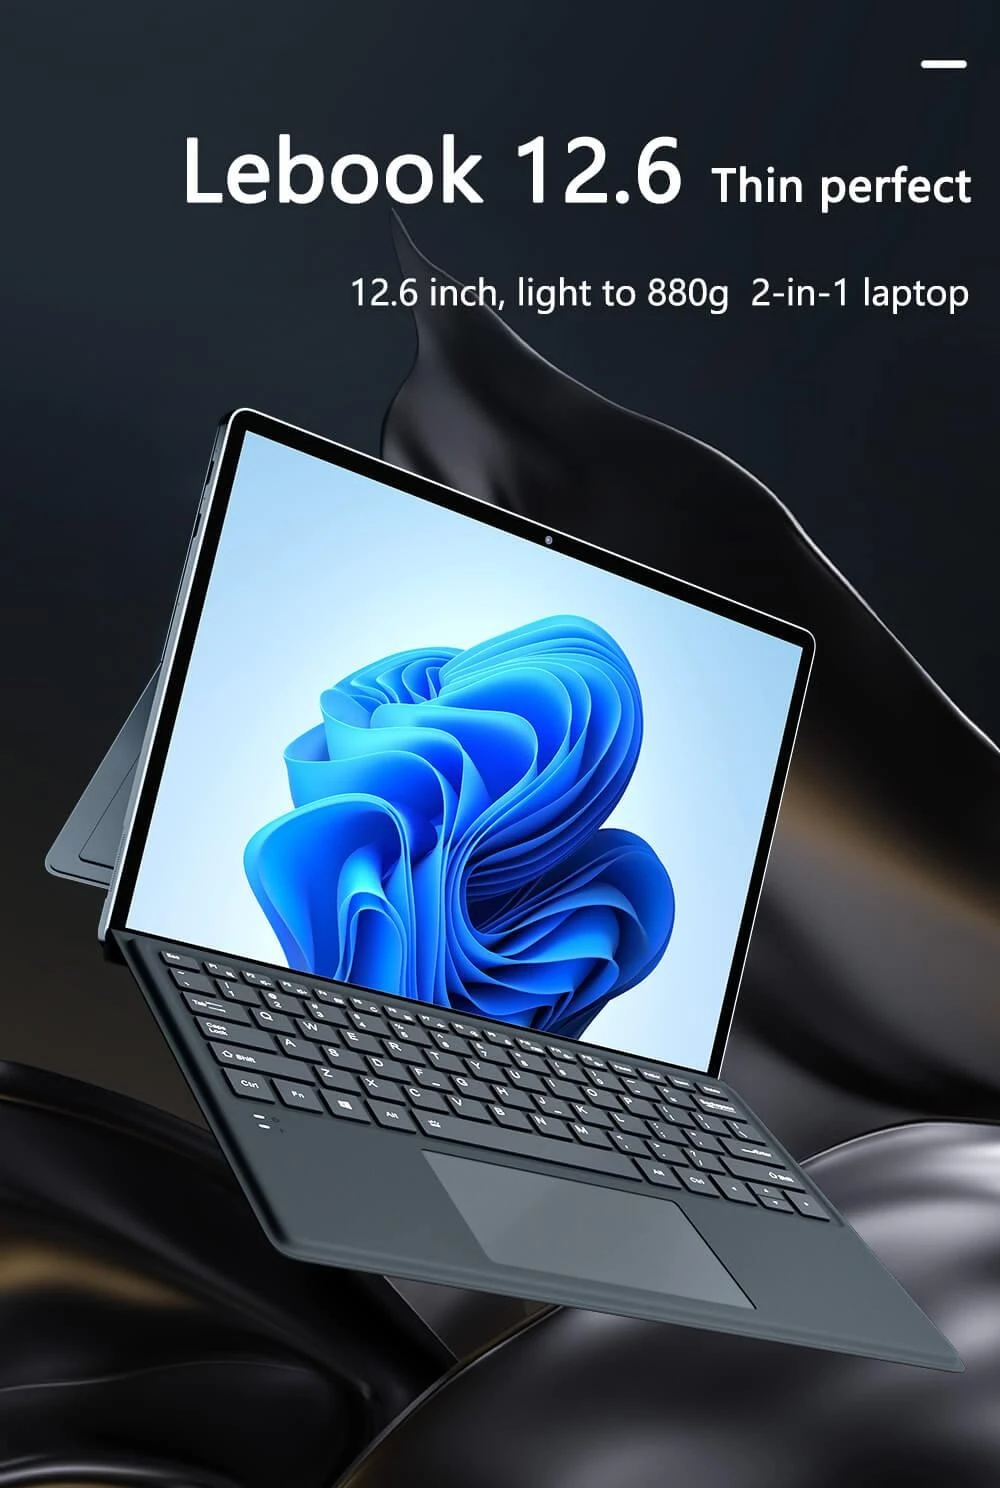 https://img.gkbcdn.com/d/202309/KUU-Lebook-Laptop-2K-Touch-IPS-Display-522319-0._p1_.jpg